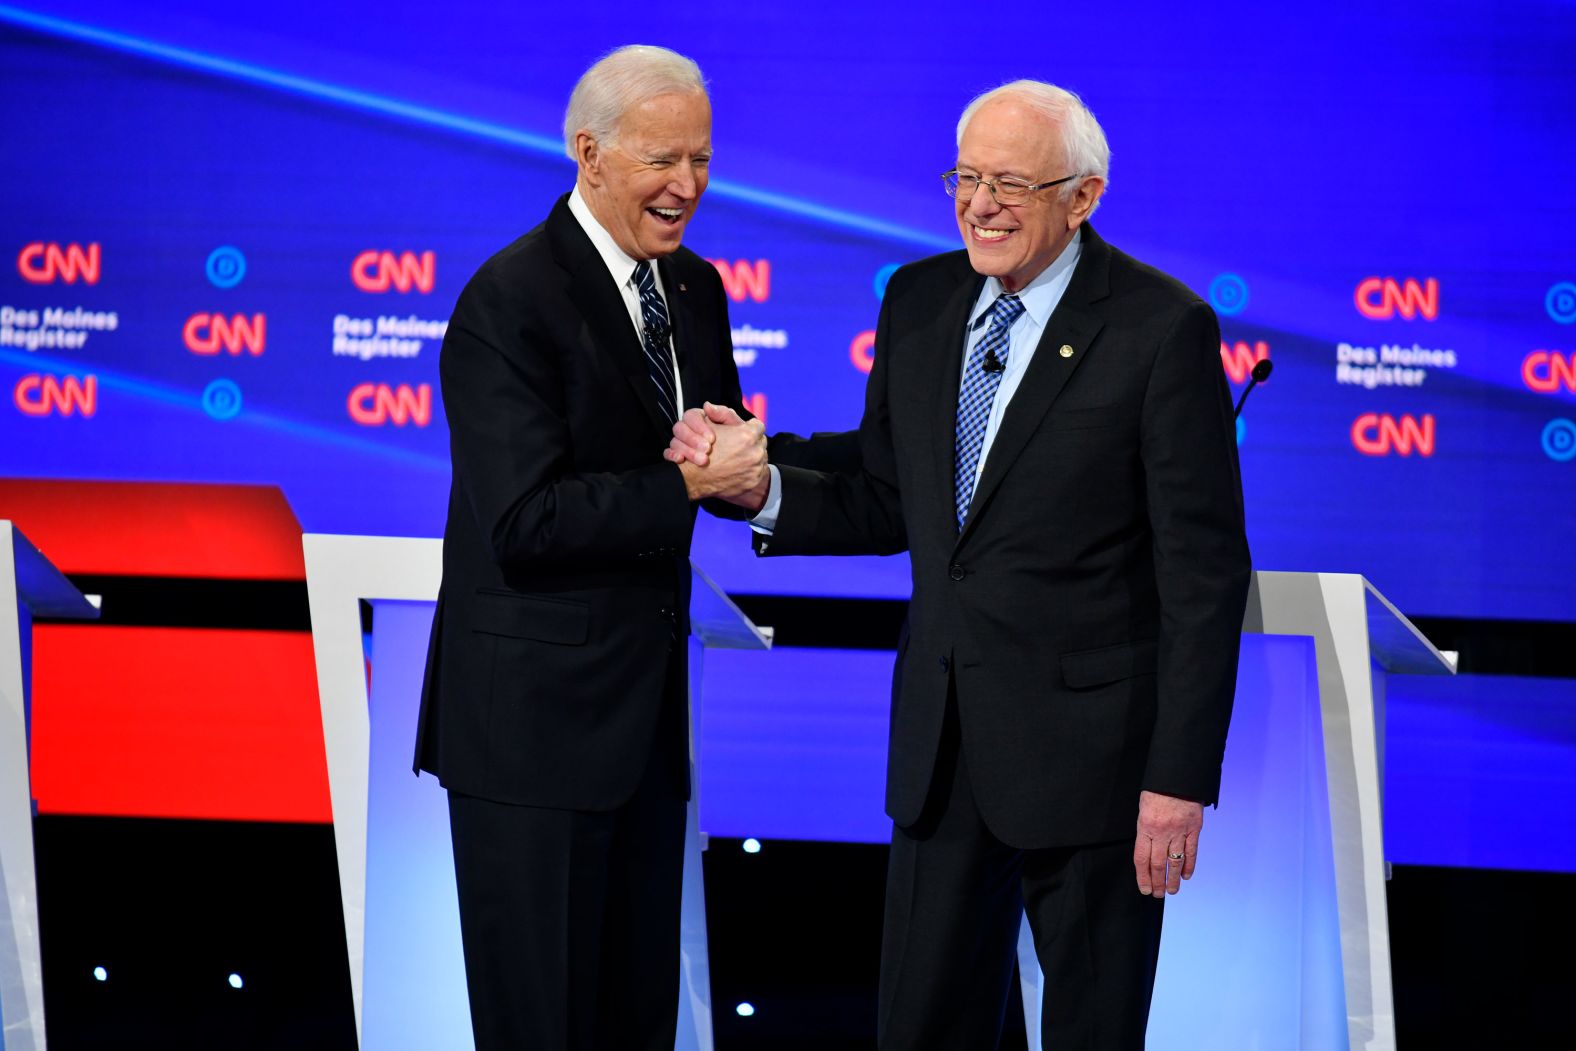 Biden and Sanders shake hands at the beginning of the debate.